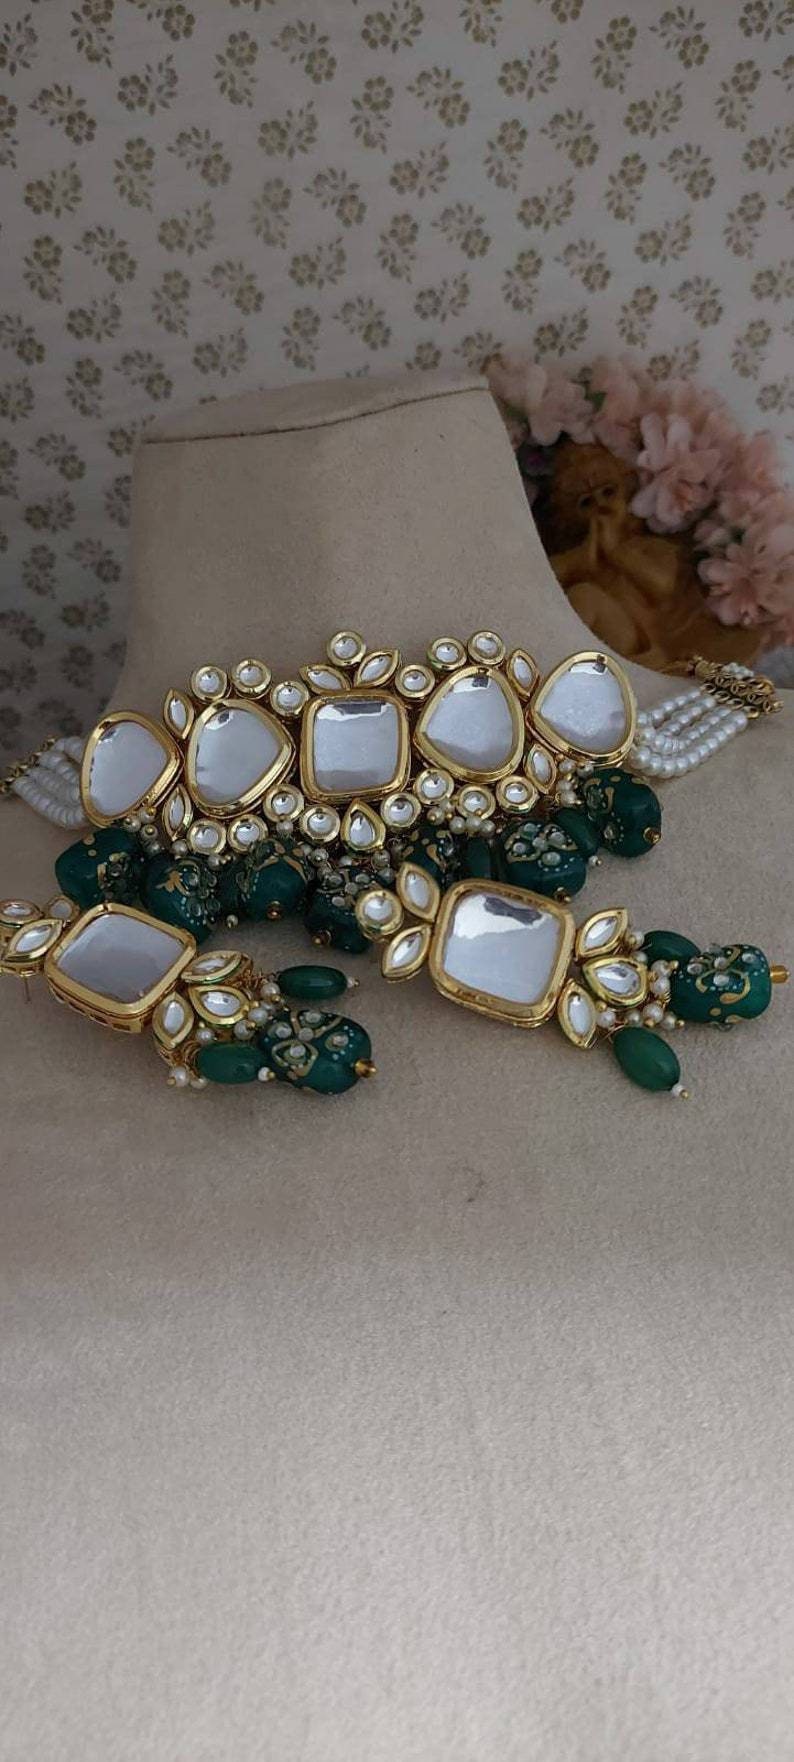 Kundan Necklace, Indian Jewelry, Indian Wedding Jewelry, Ethnic Jewelry Design, Kundan Jewelry Set, Bridal Jewelry Set, Sabyasachi Necklace | Save 33% - Rajasthan Living 11